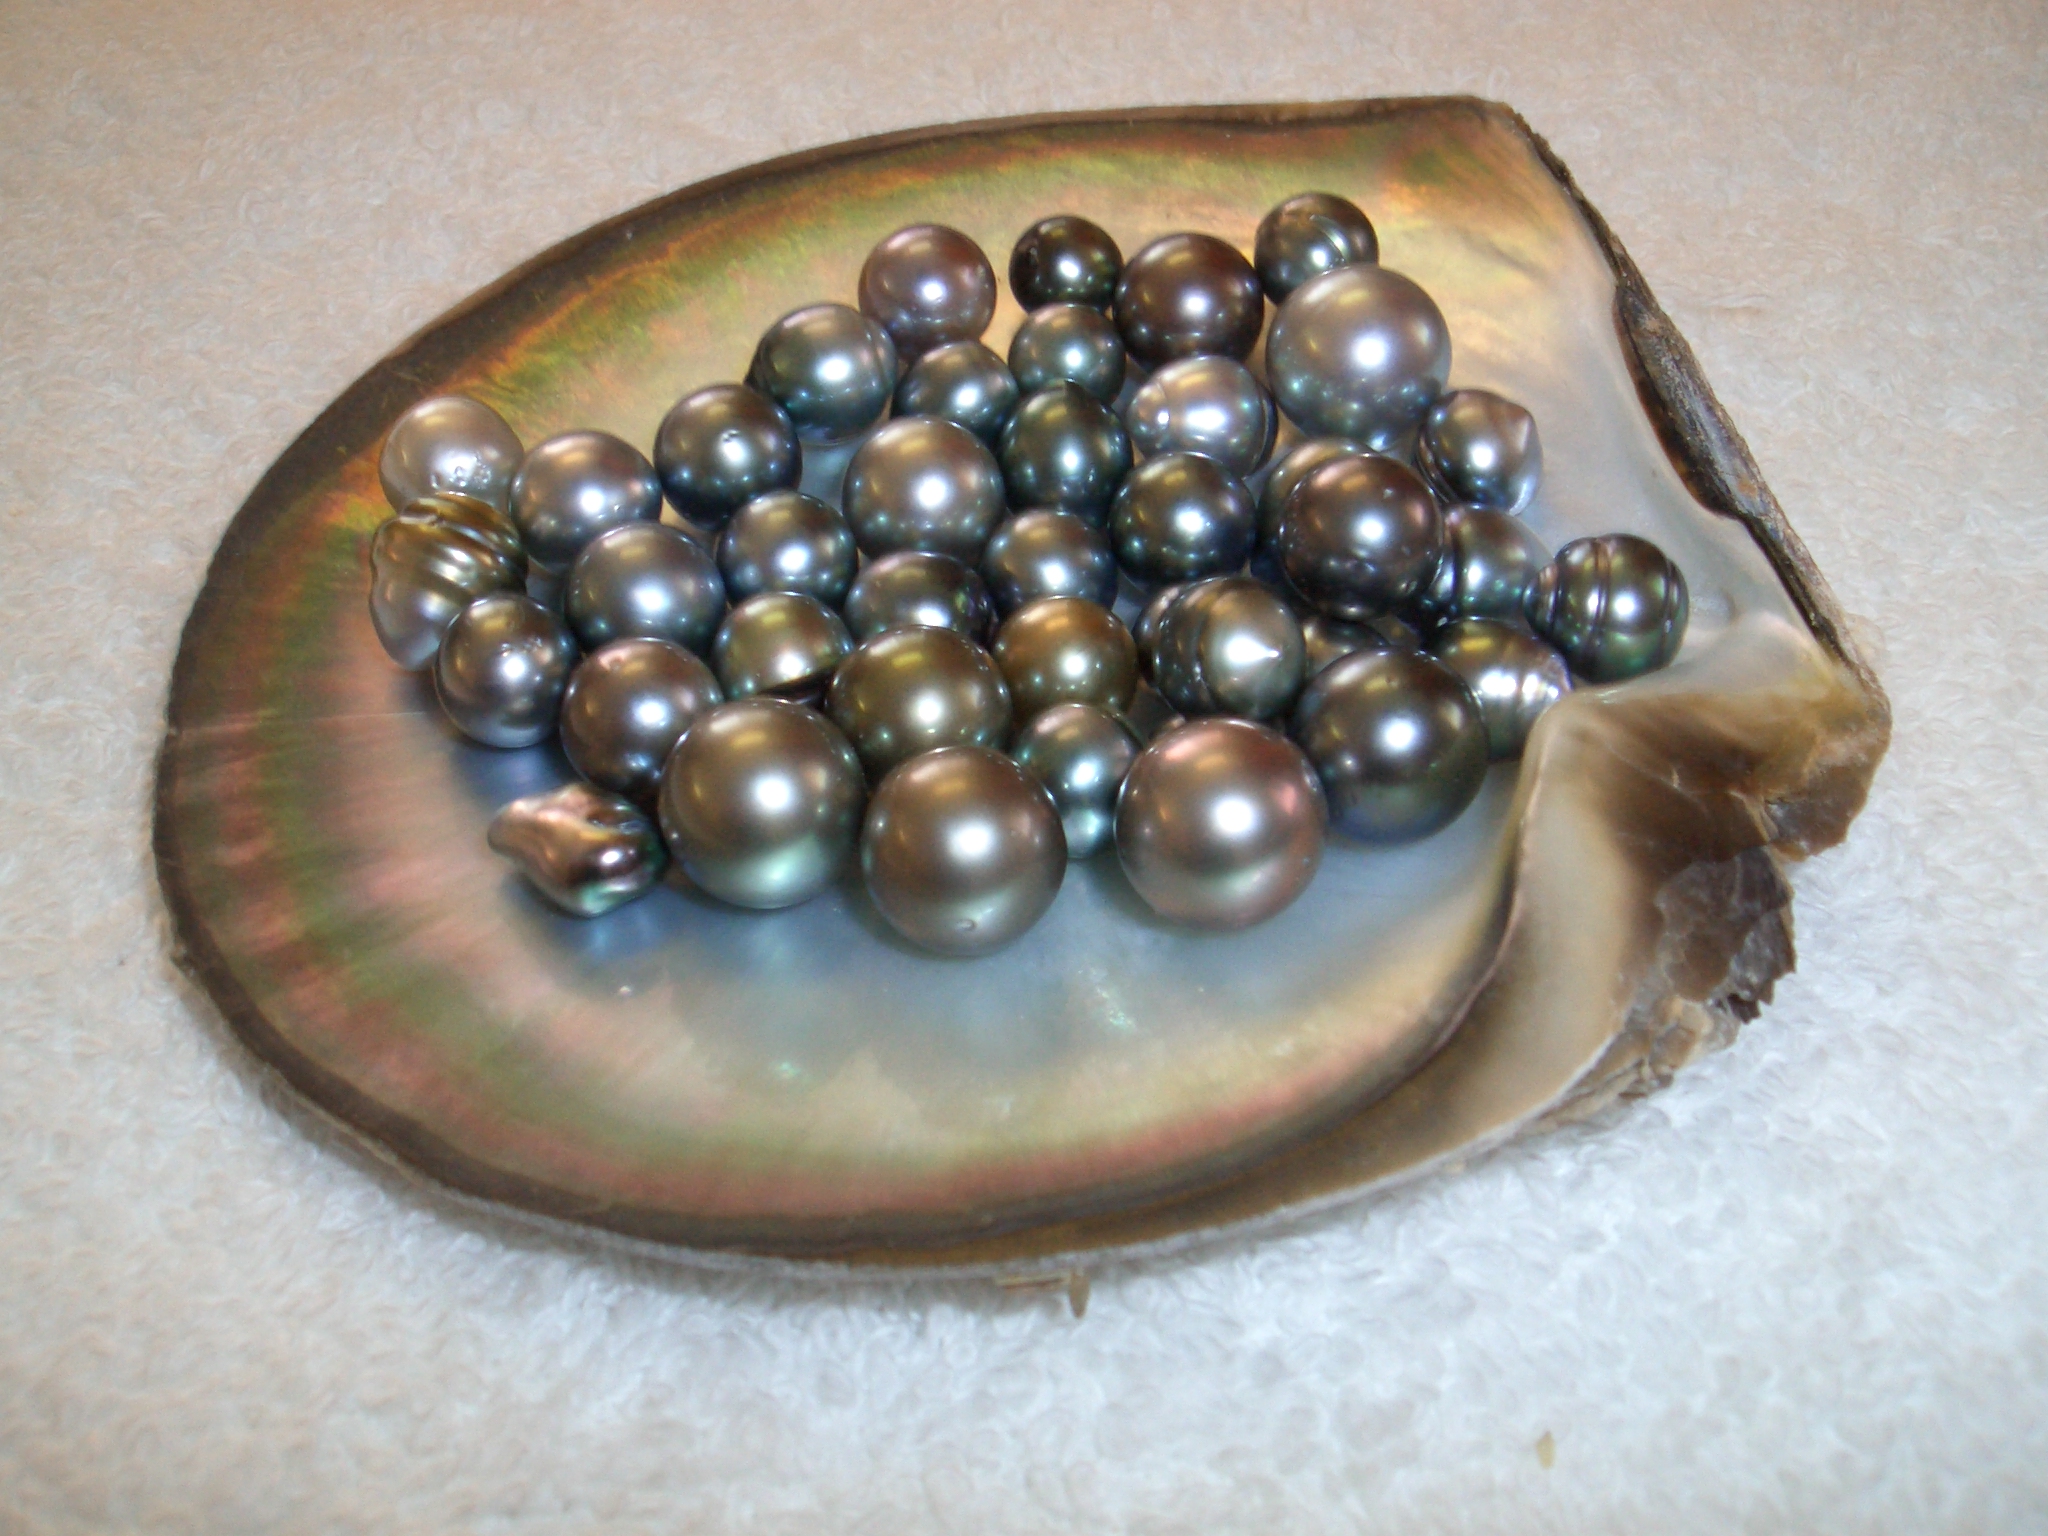 huitre et ses perle de tahiti